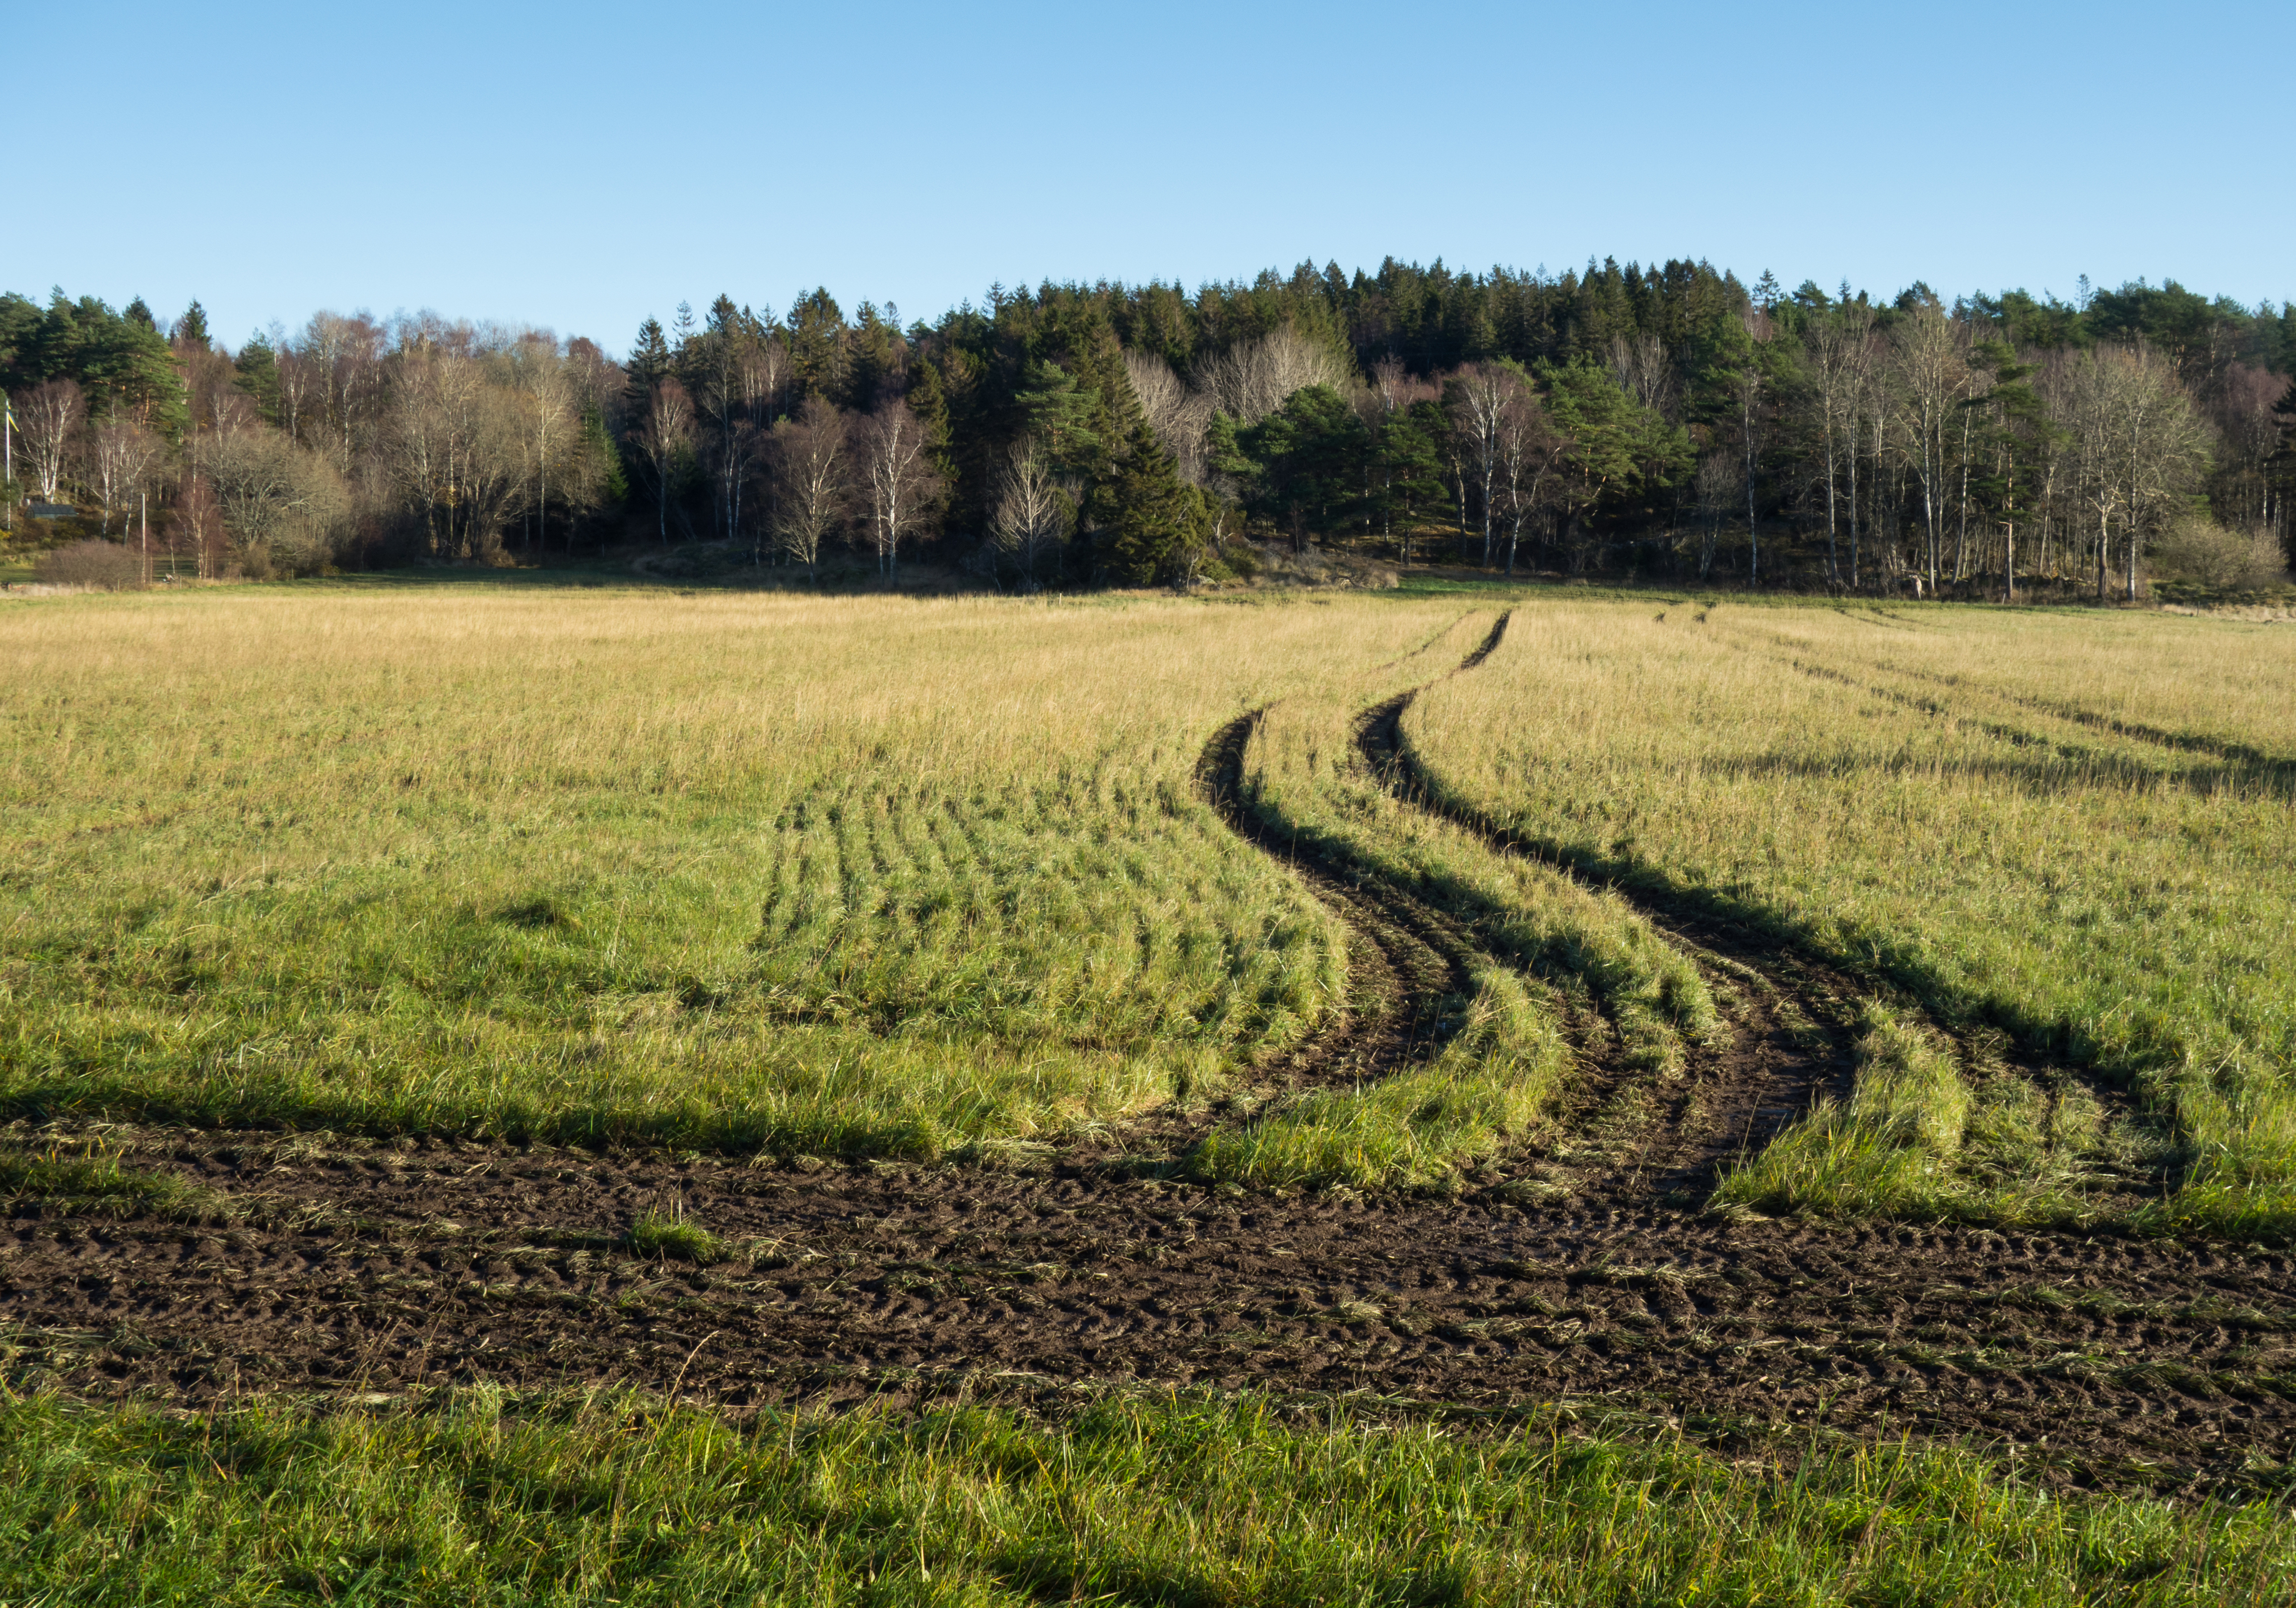 Tractor tracks in a field in gåseberg photo